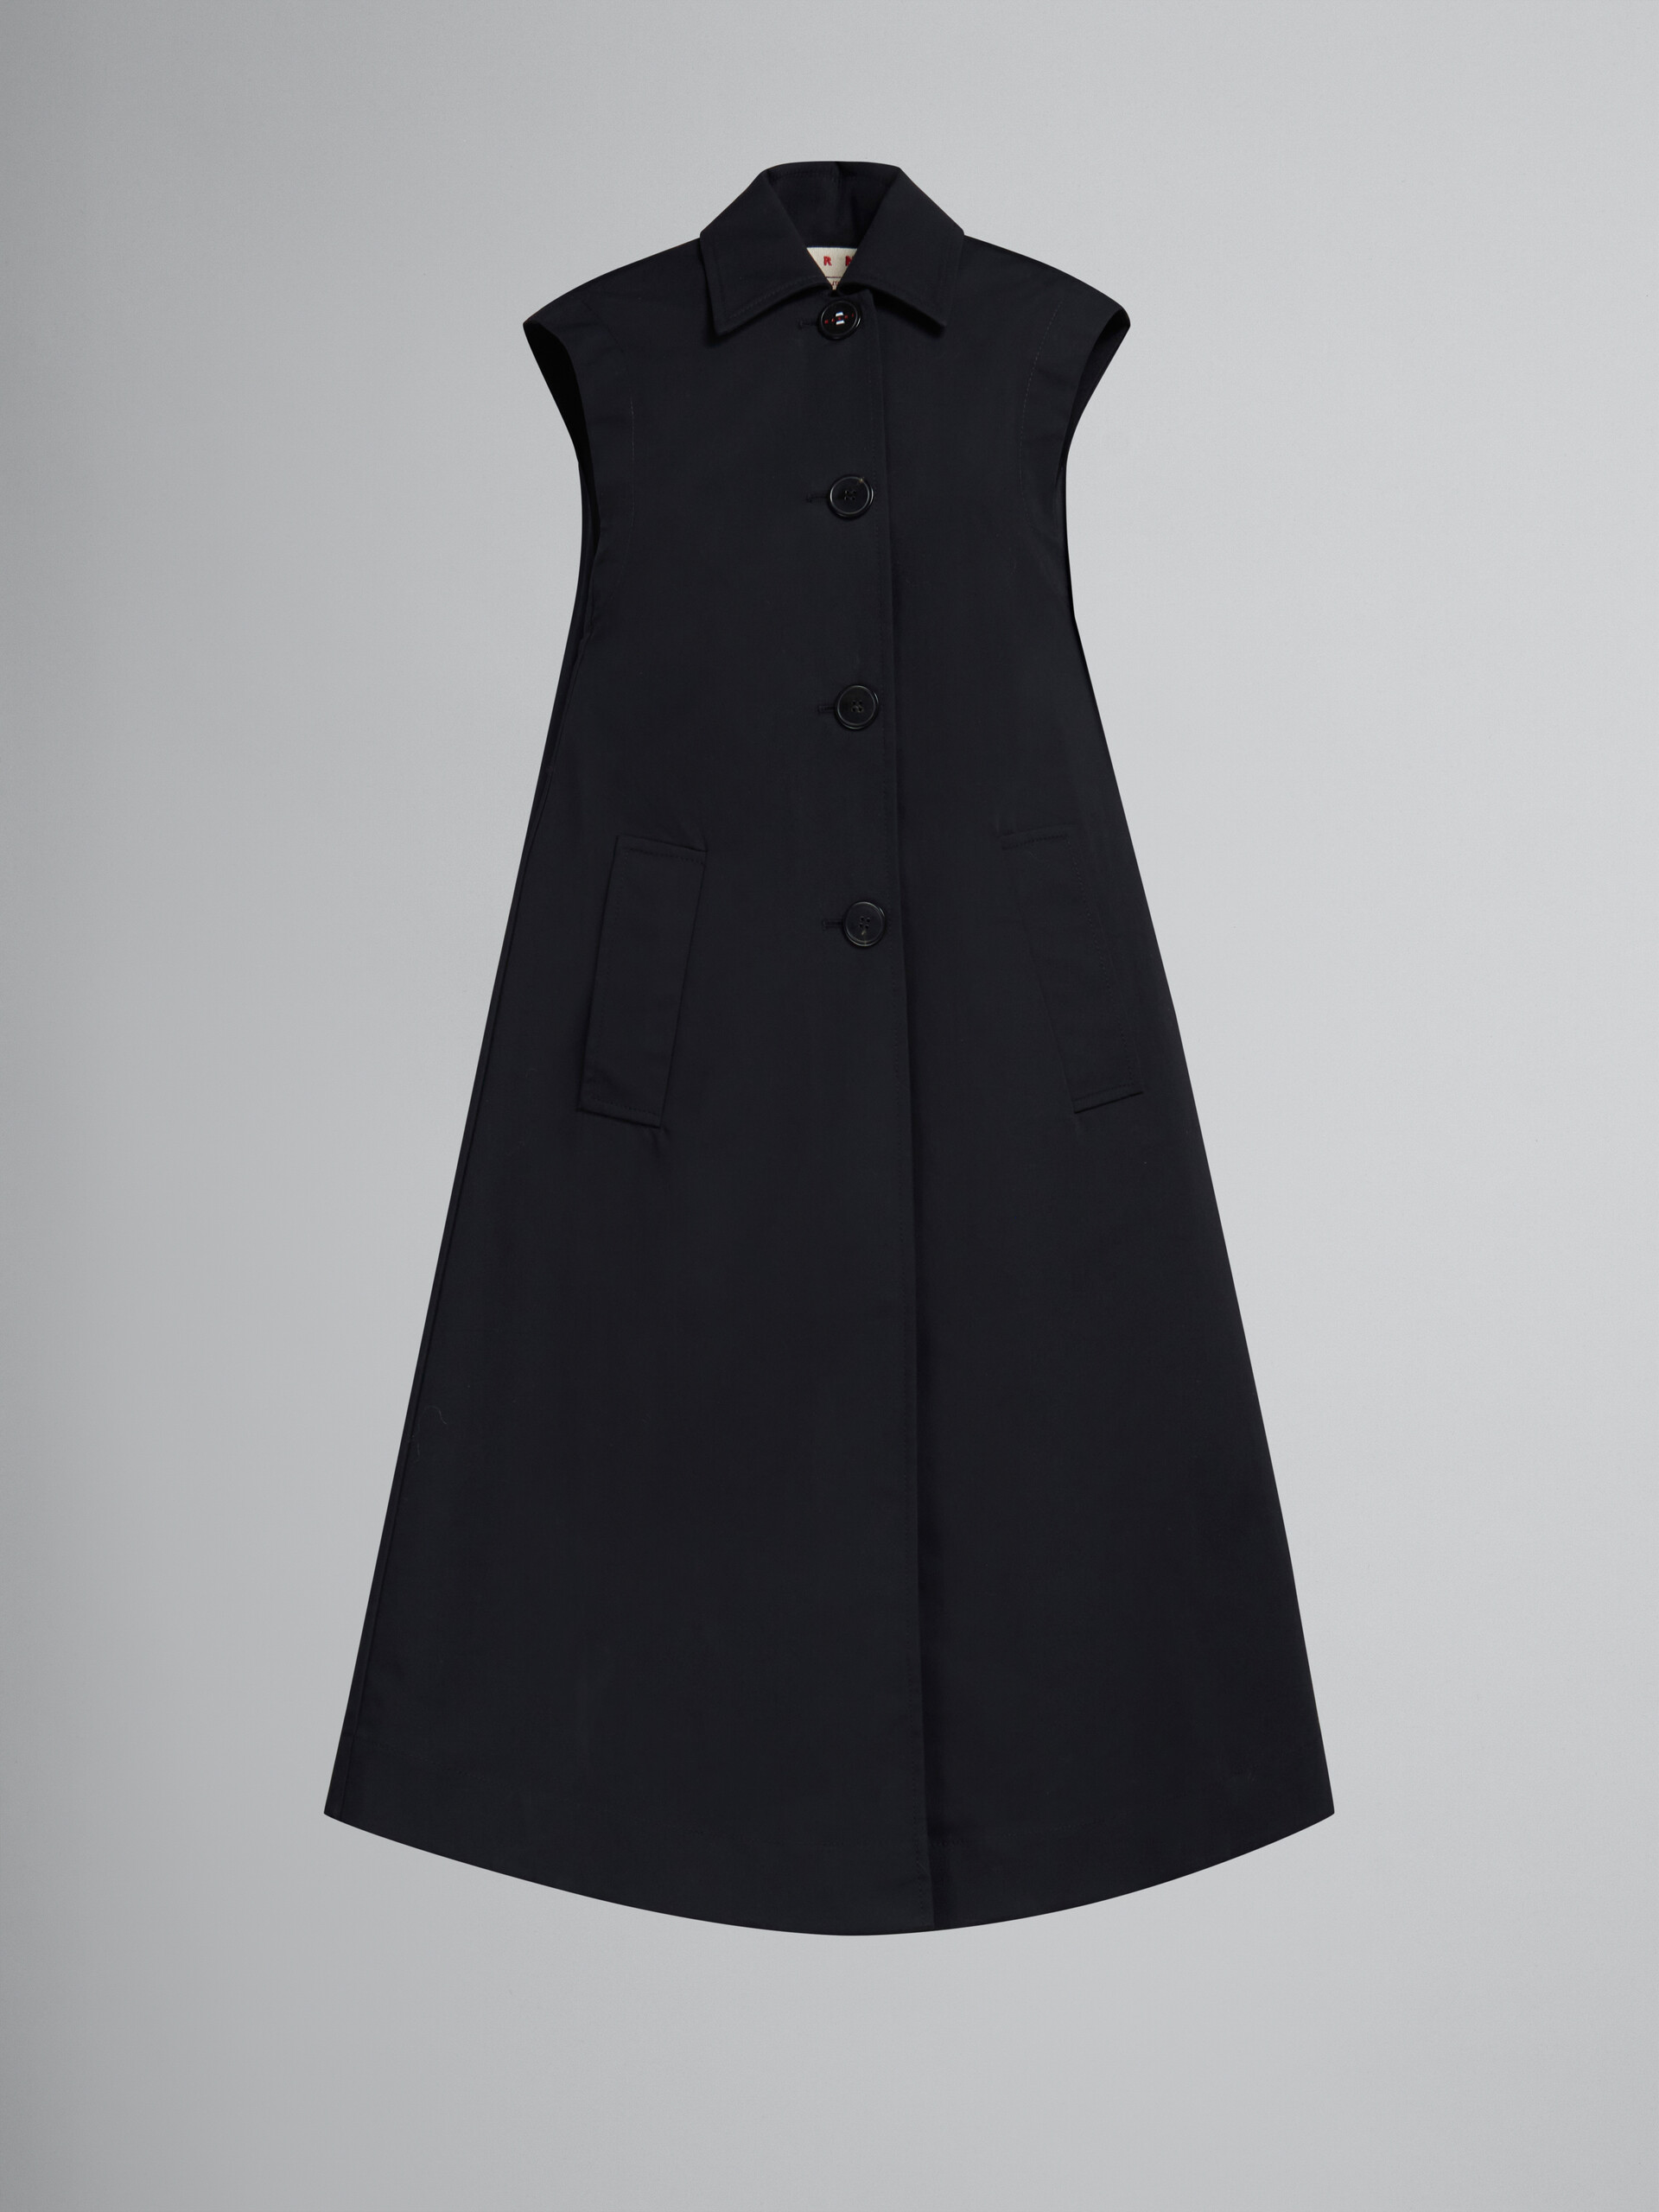 Black bonded cotton cocoon dress - Waistcoats - Image 1